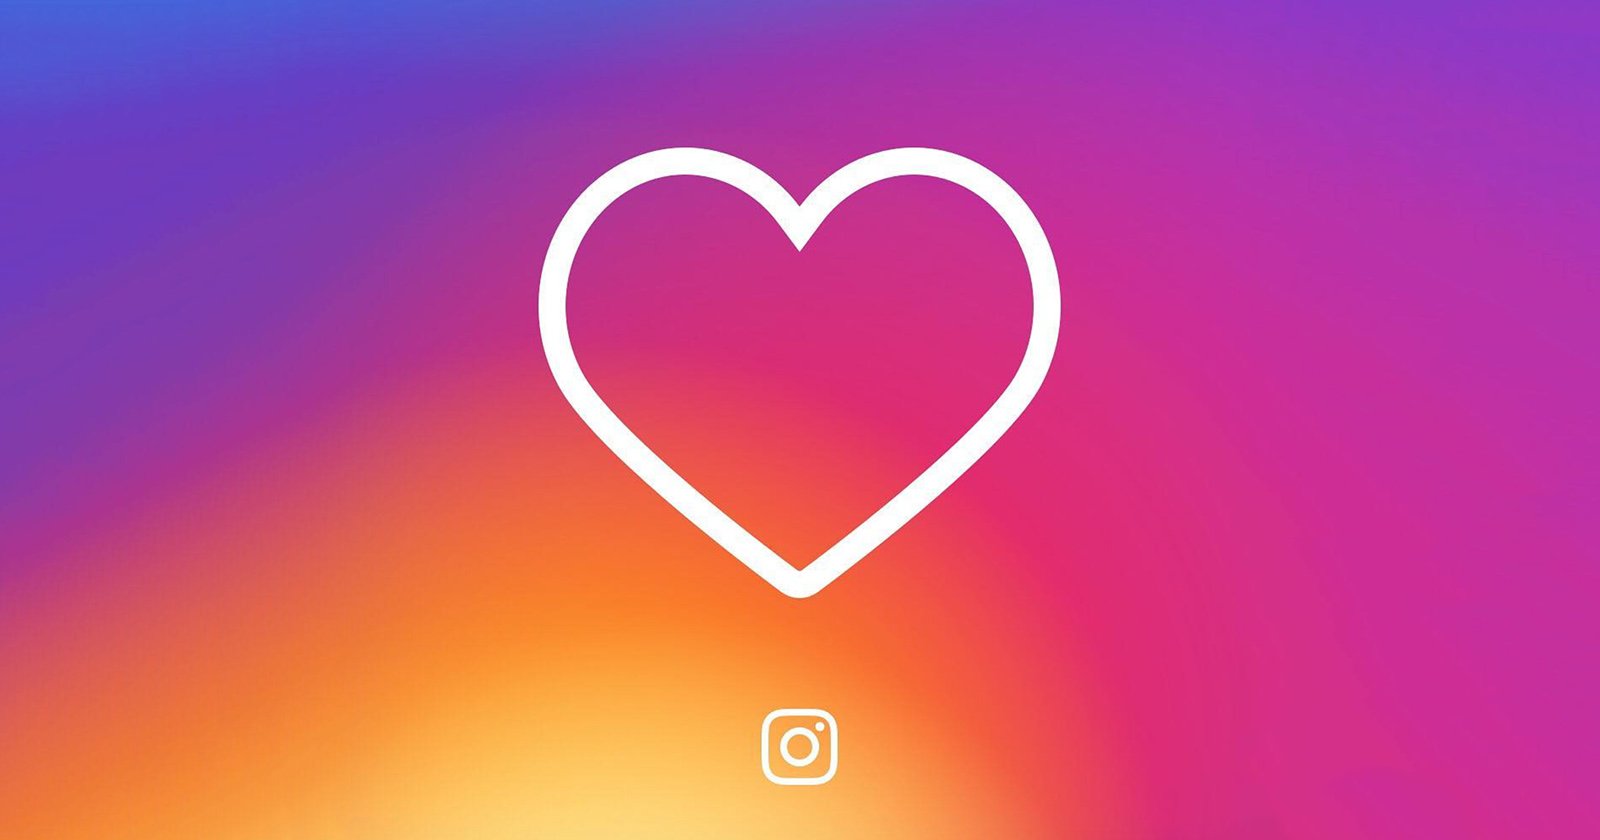  instagram will soon blur sensitive photos might 